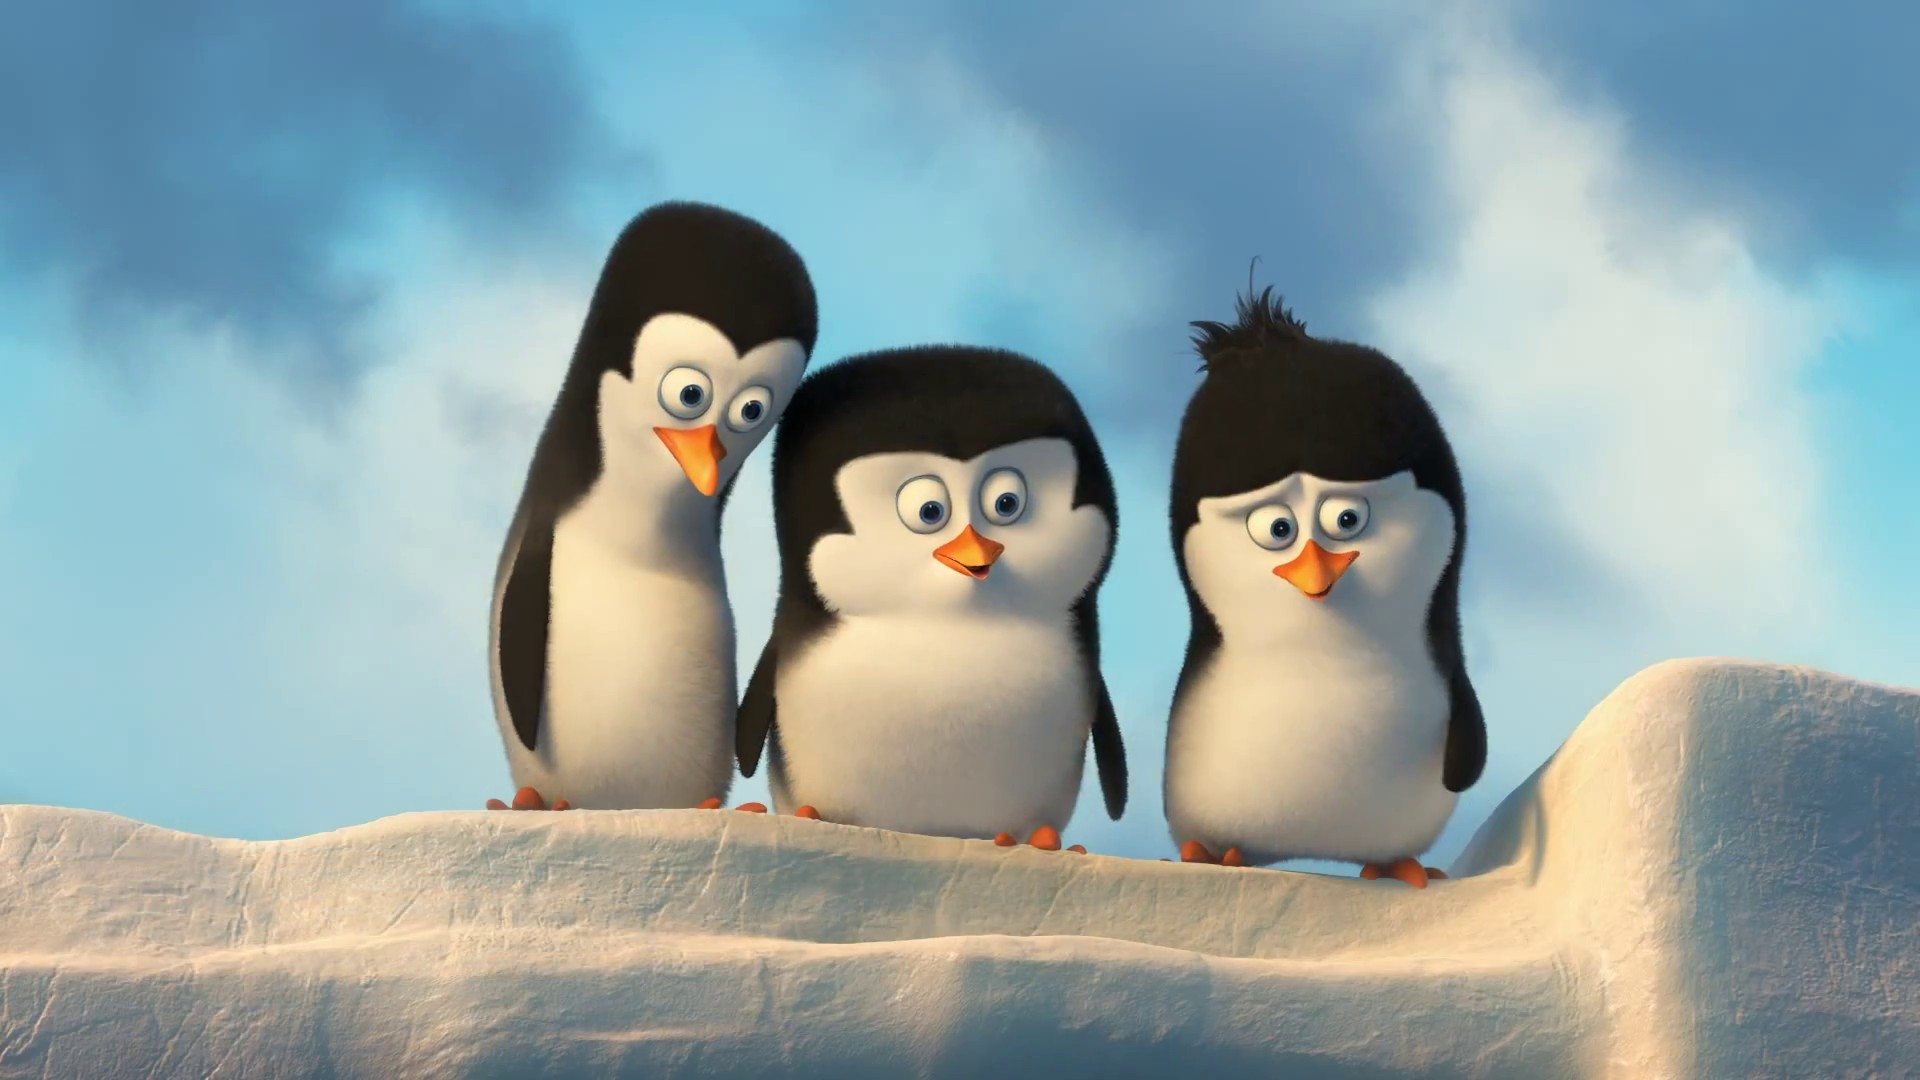 Penguins of Madagascar wallpaper hd free download